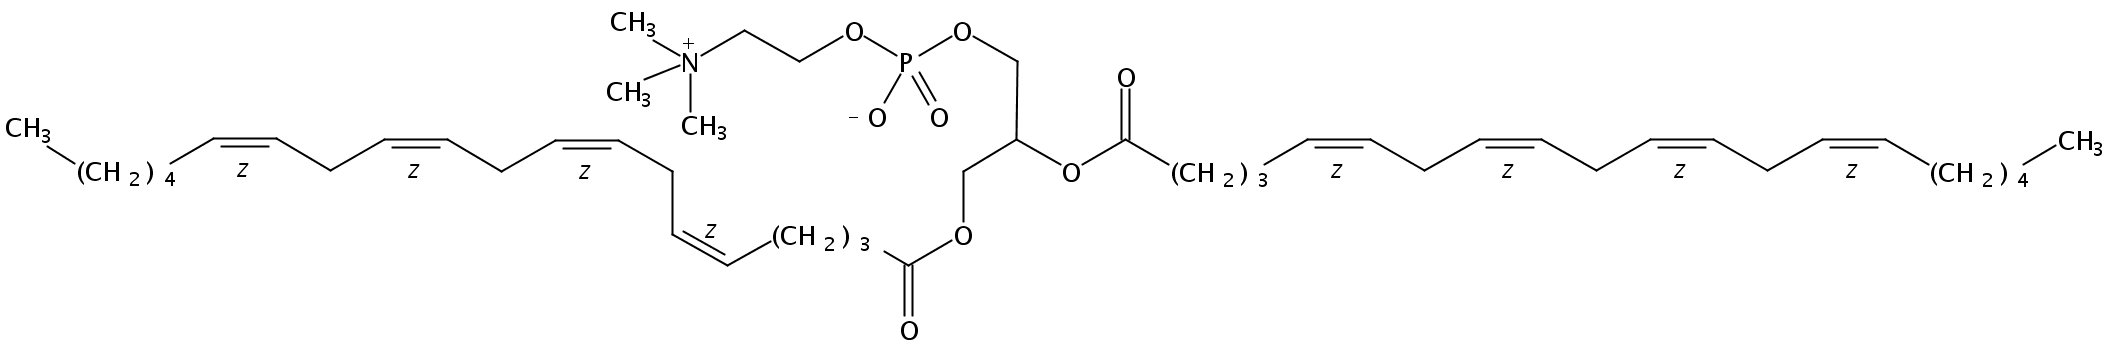 Structural formula of 1,2-Diarachidonoyl-sn-Glycero-3-Phosphatidylcholine